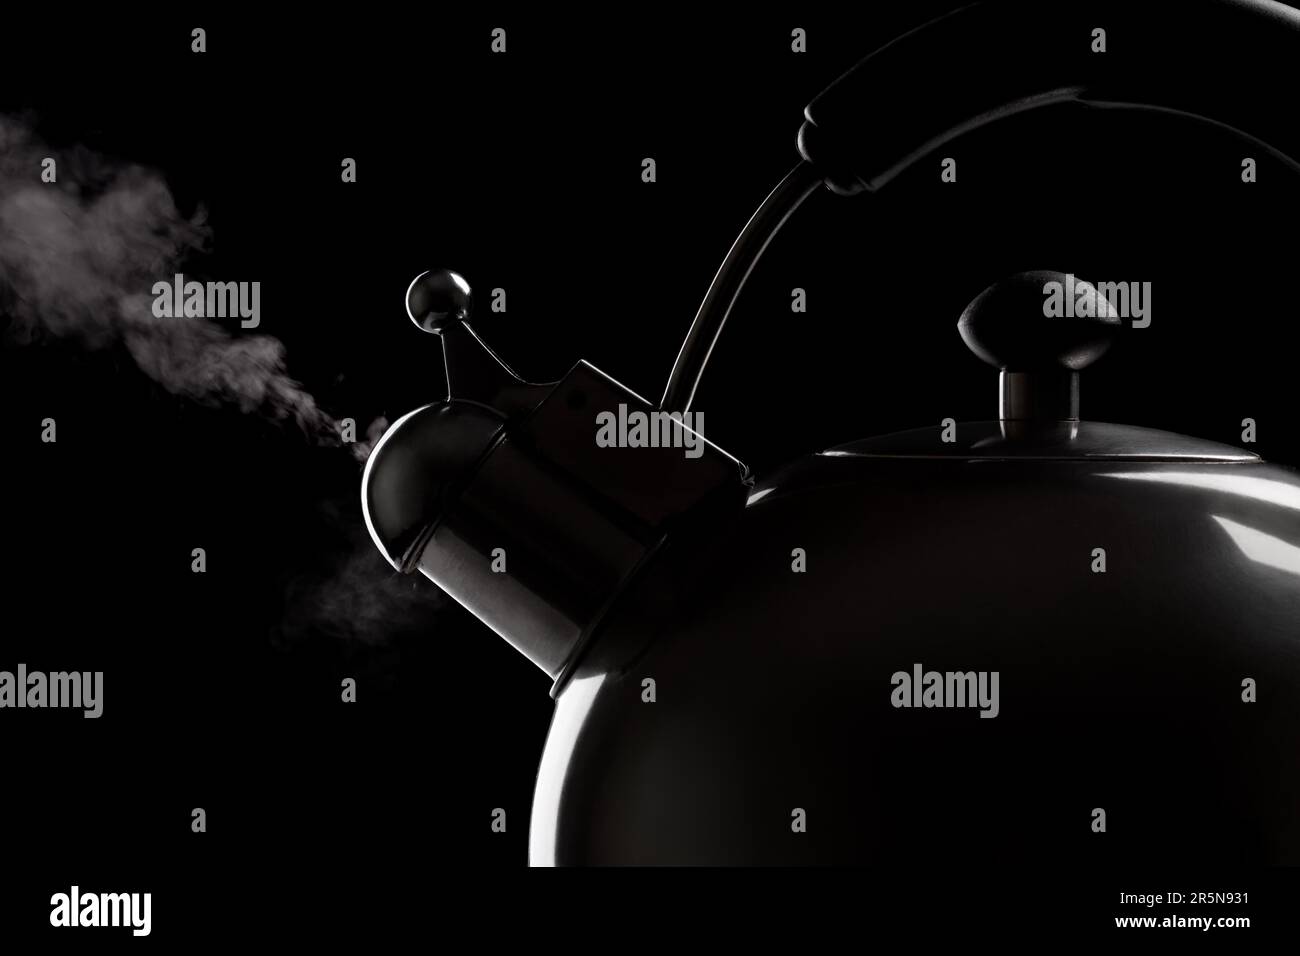 https://c8.alamy.com/comp/2R5N931/tea-kettle-with-boiling-water-over-dark-background-2R5N931.jpg